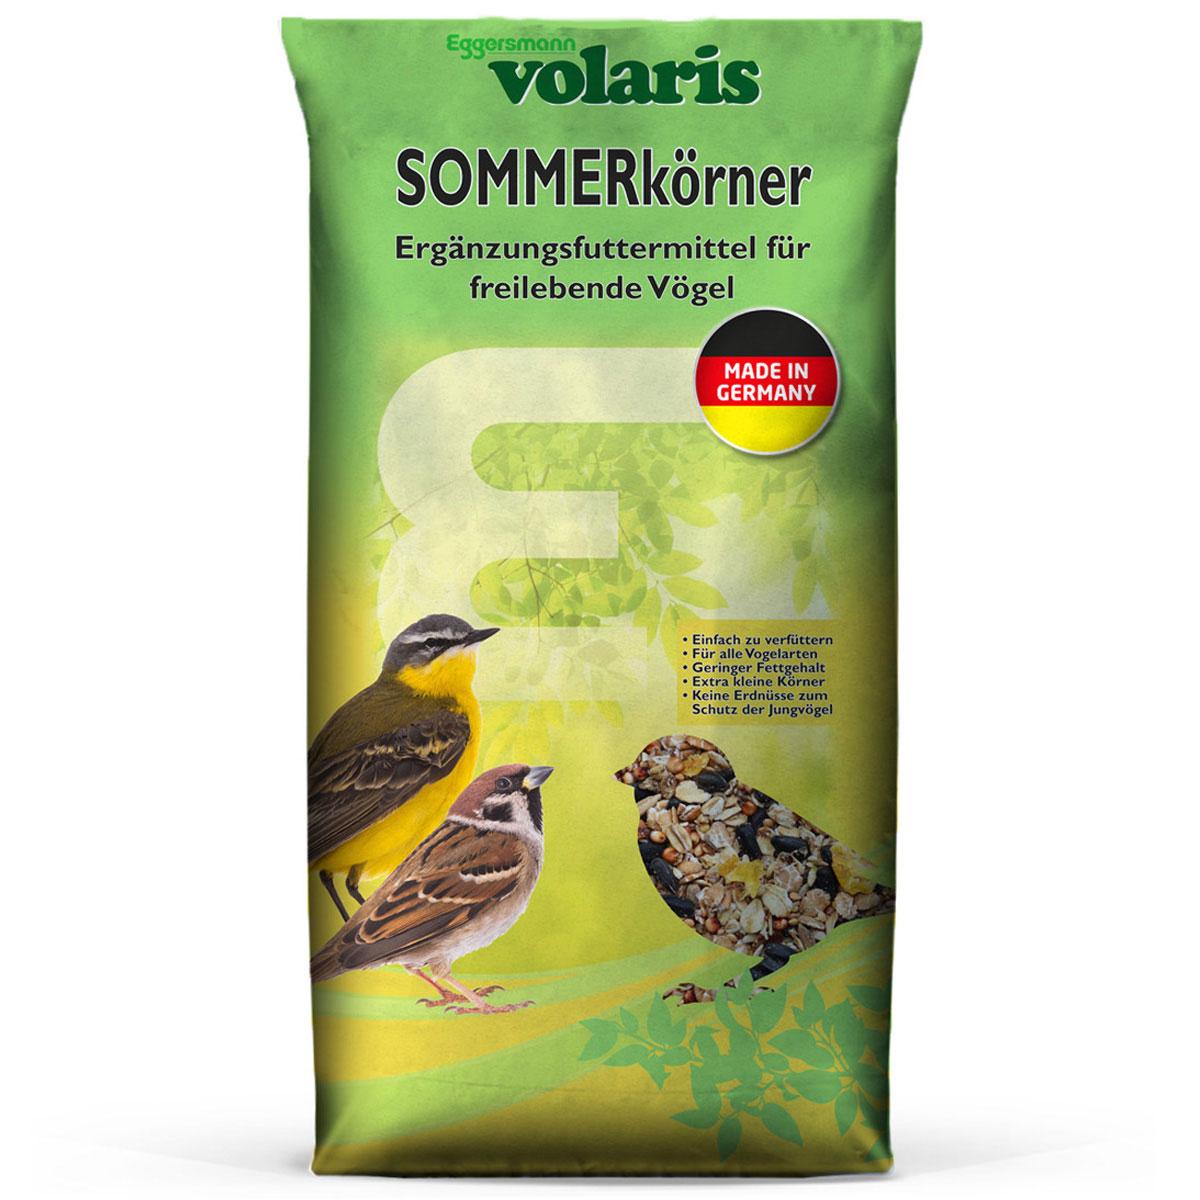 Eggersmann volaris - SOMMERkörner 25 kg